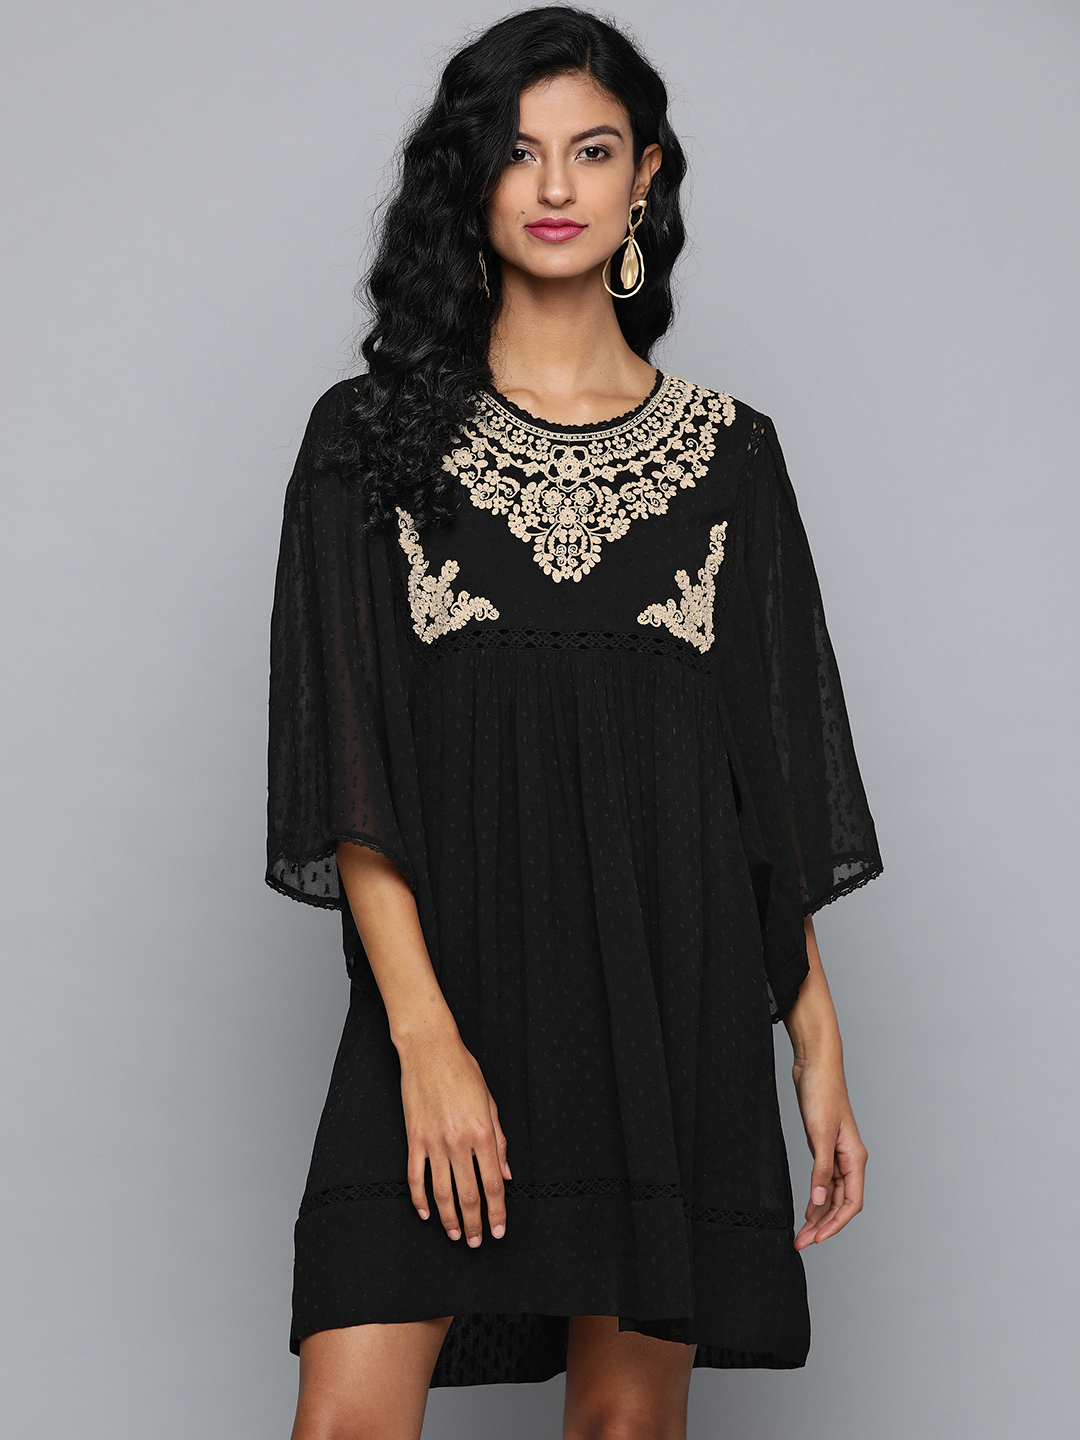 Label Ritu Kumar Women Black & Beige Self Design Empire Dress Price in India